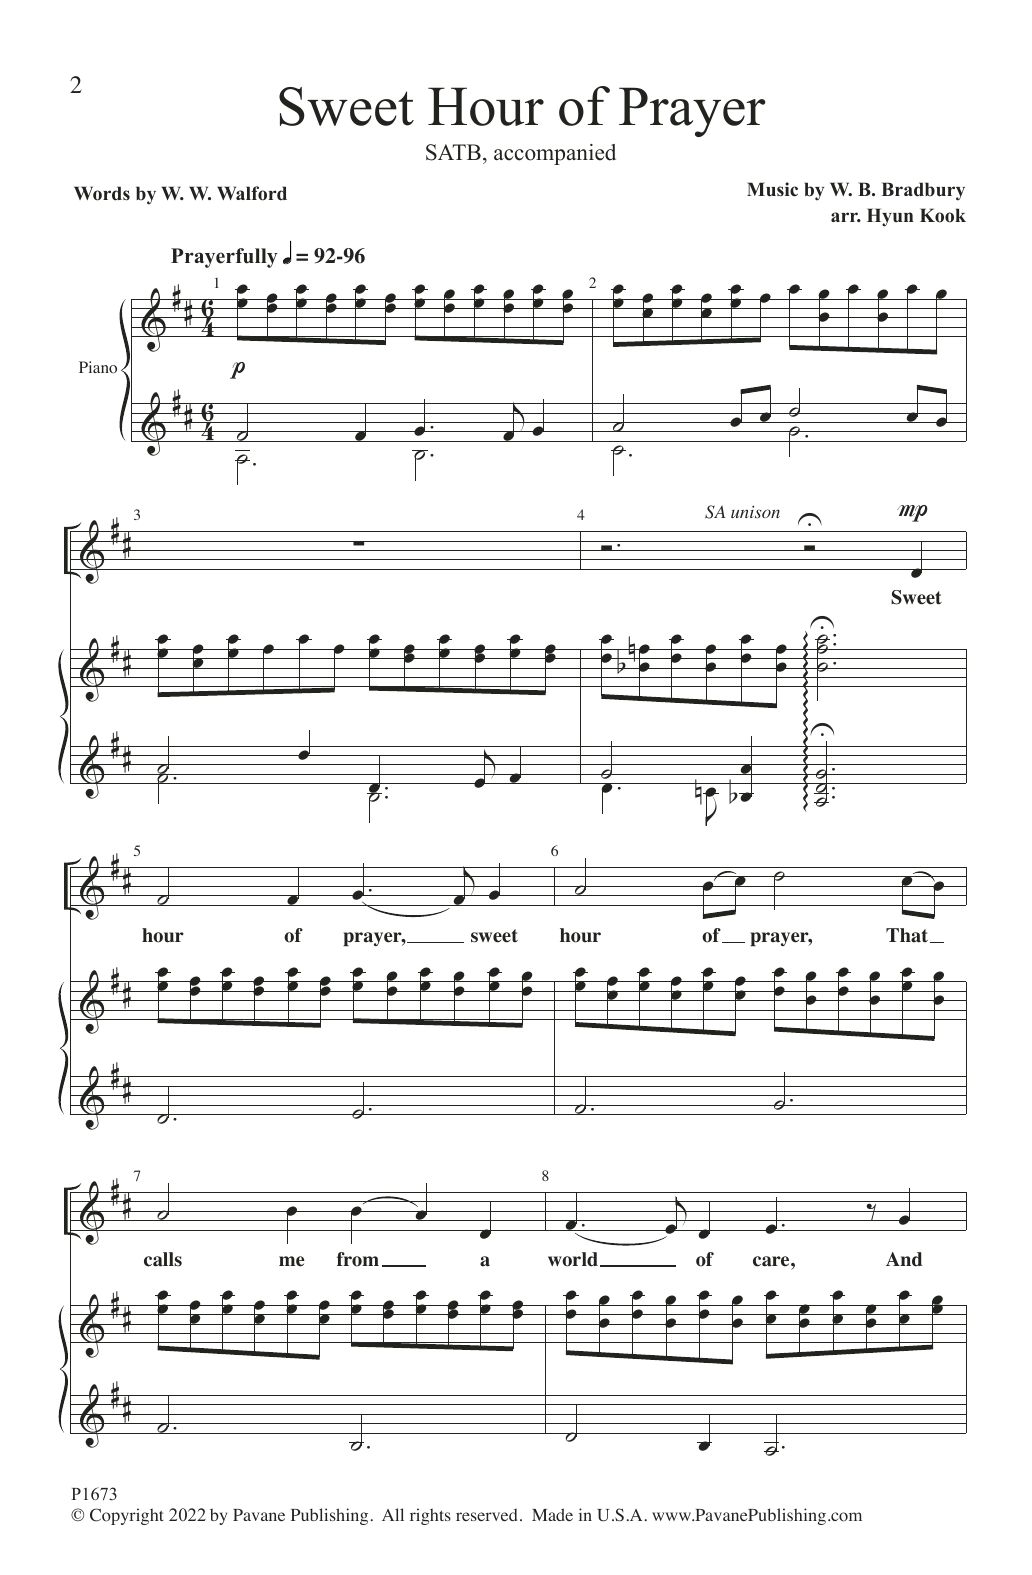 Download W.B. Bradbury Sweet Hour of Prayer (arr. Hyun Kook) Sheet Music and learn how to play SATB Choir PDF digital score in minutes